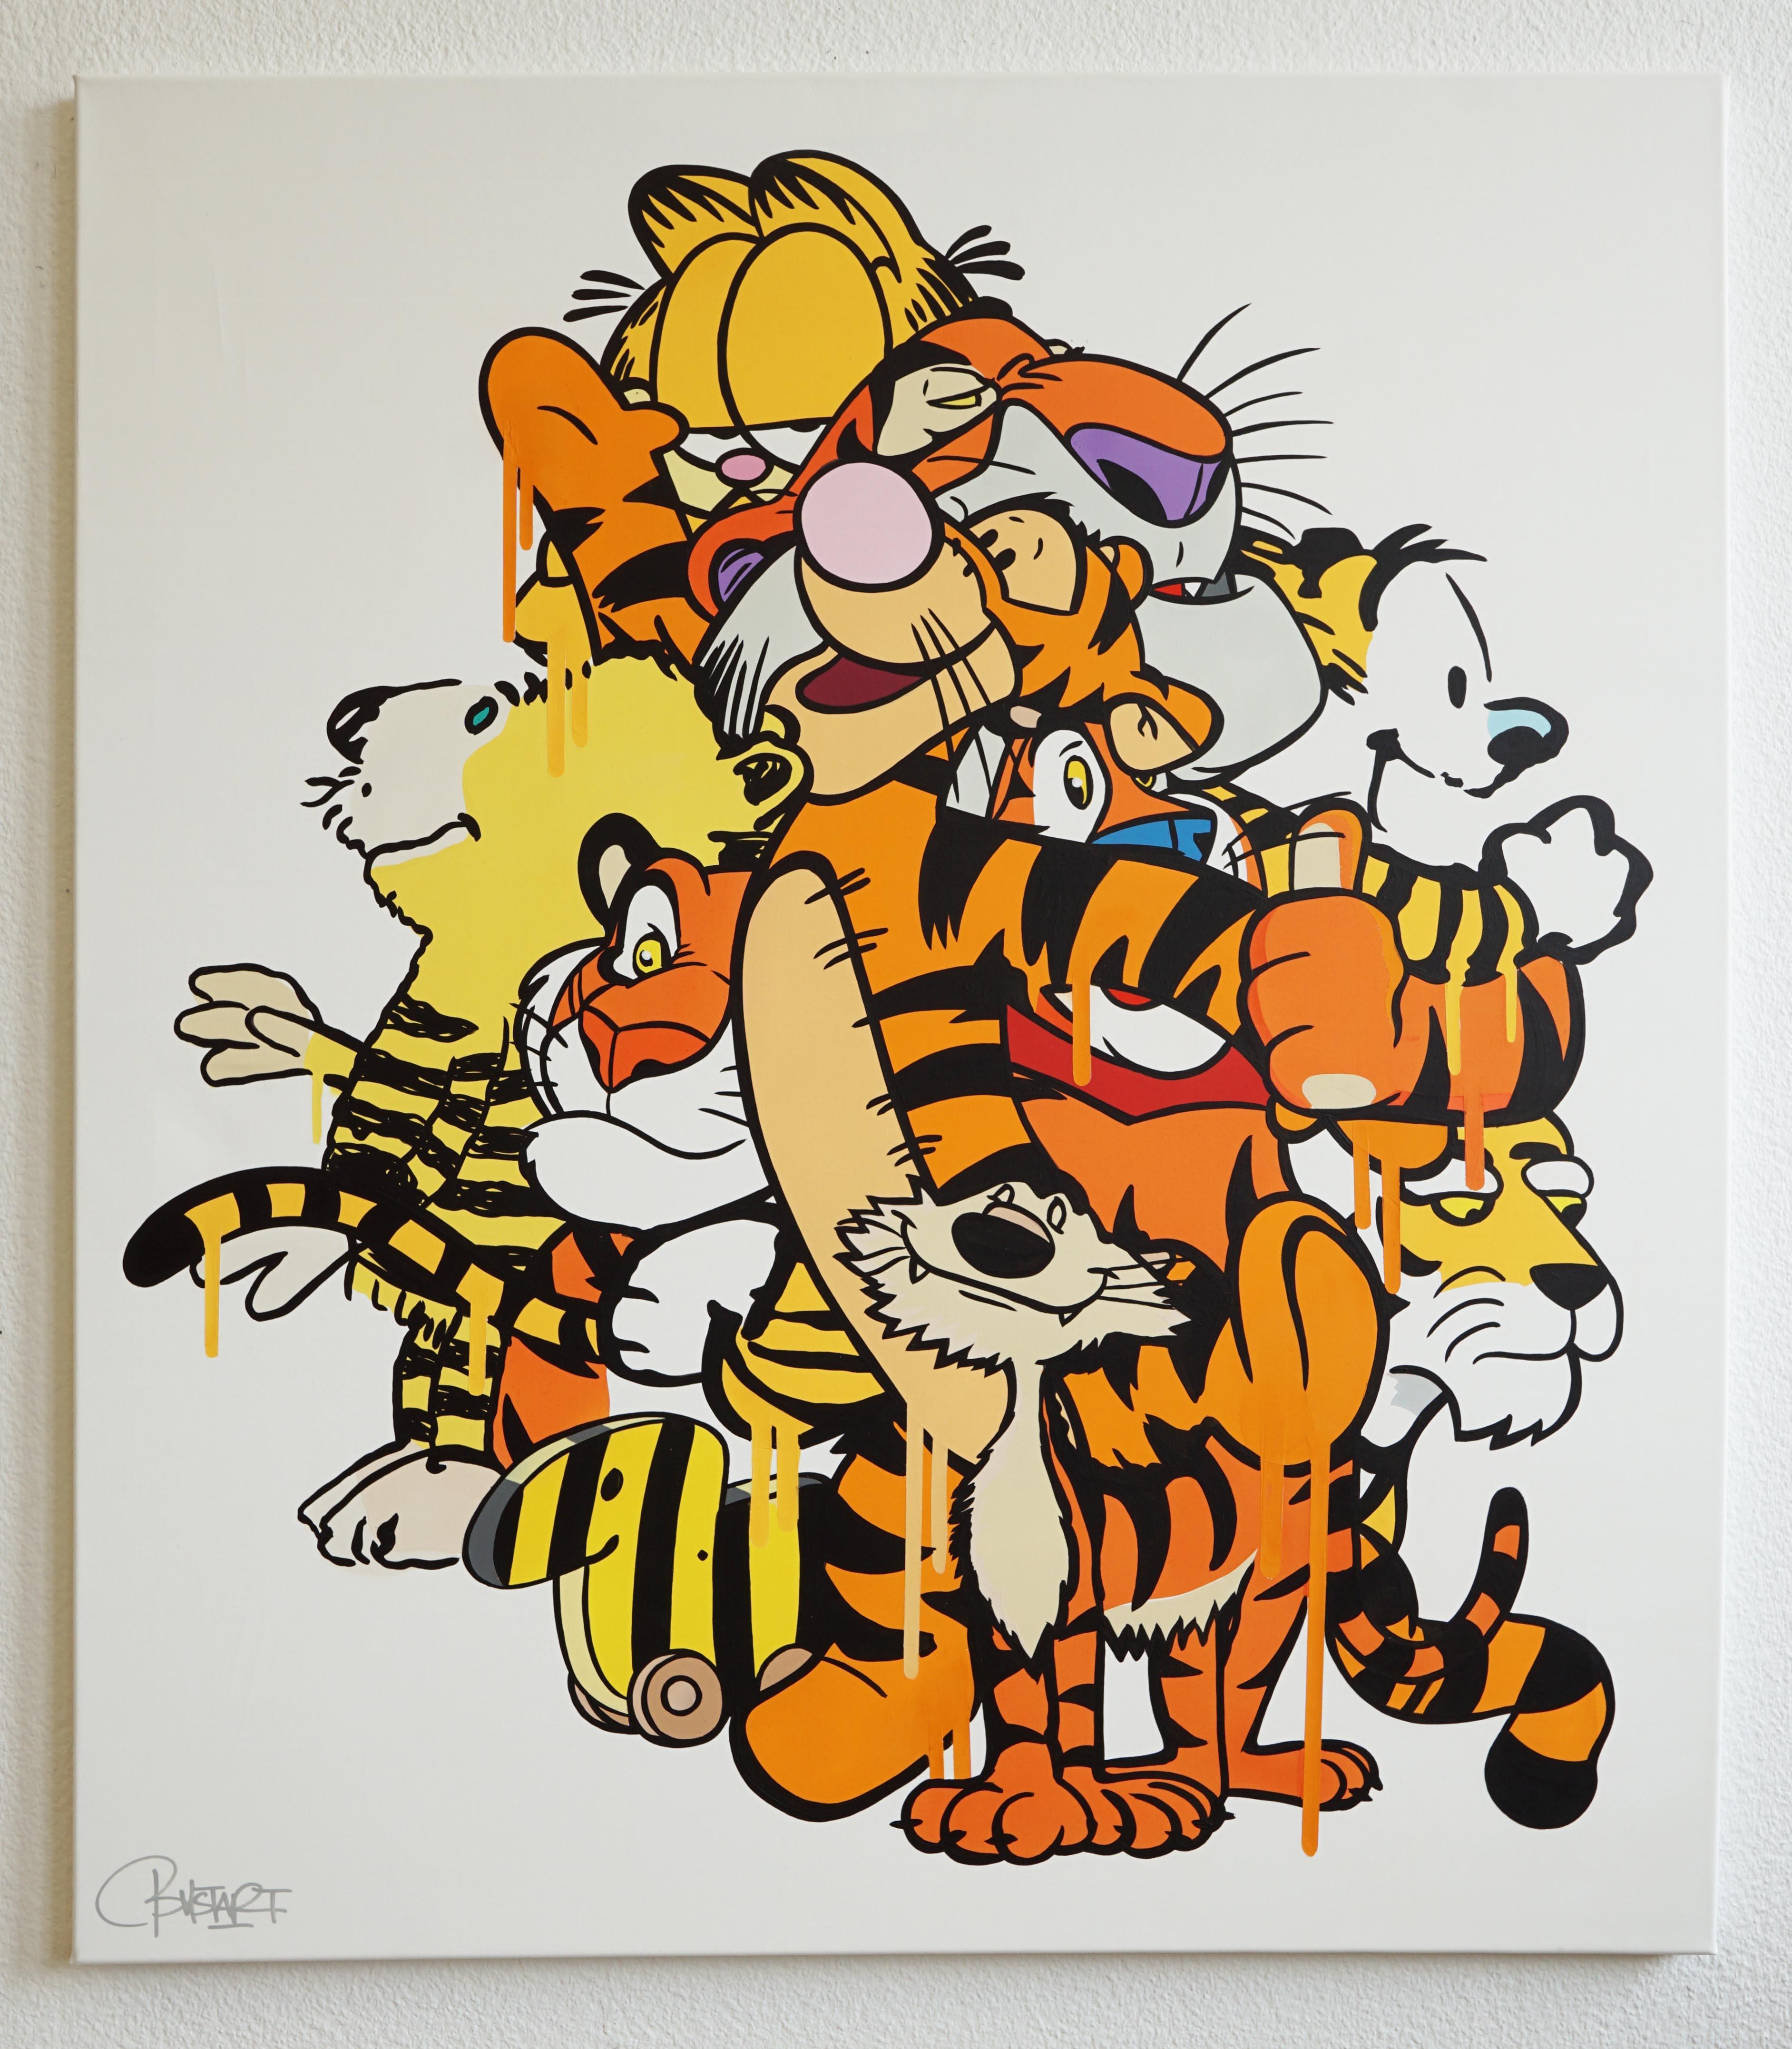 Bustart Figurative Painting - "Tigers" Acrylic on canvas - 1/1